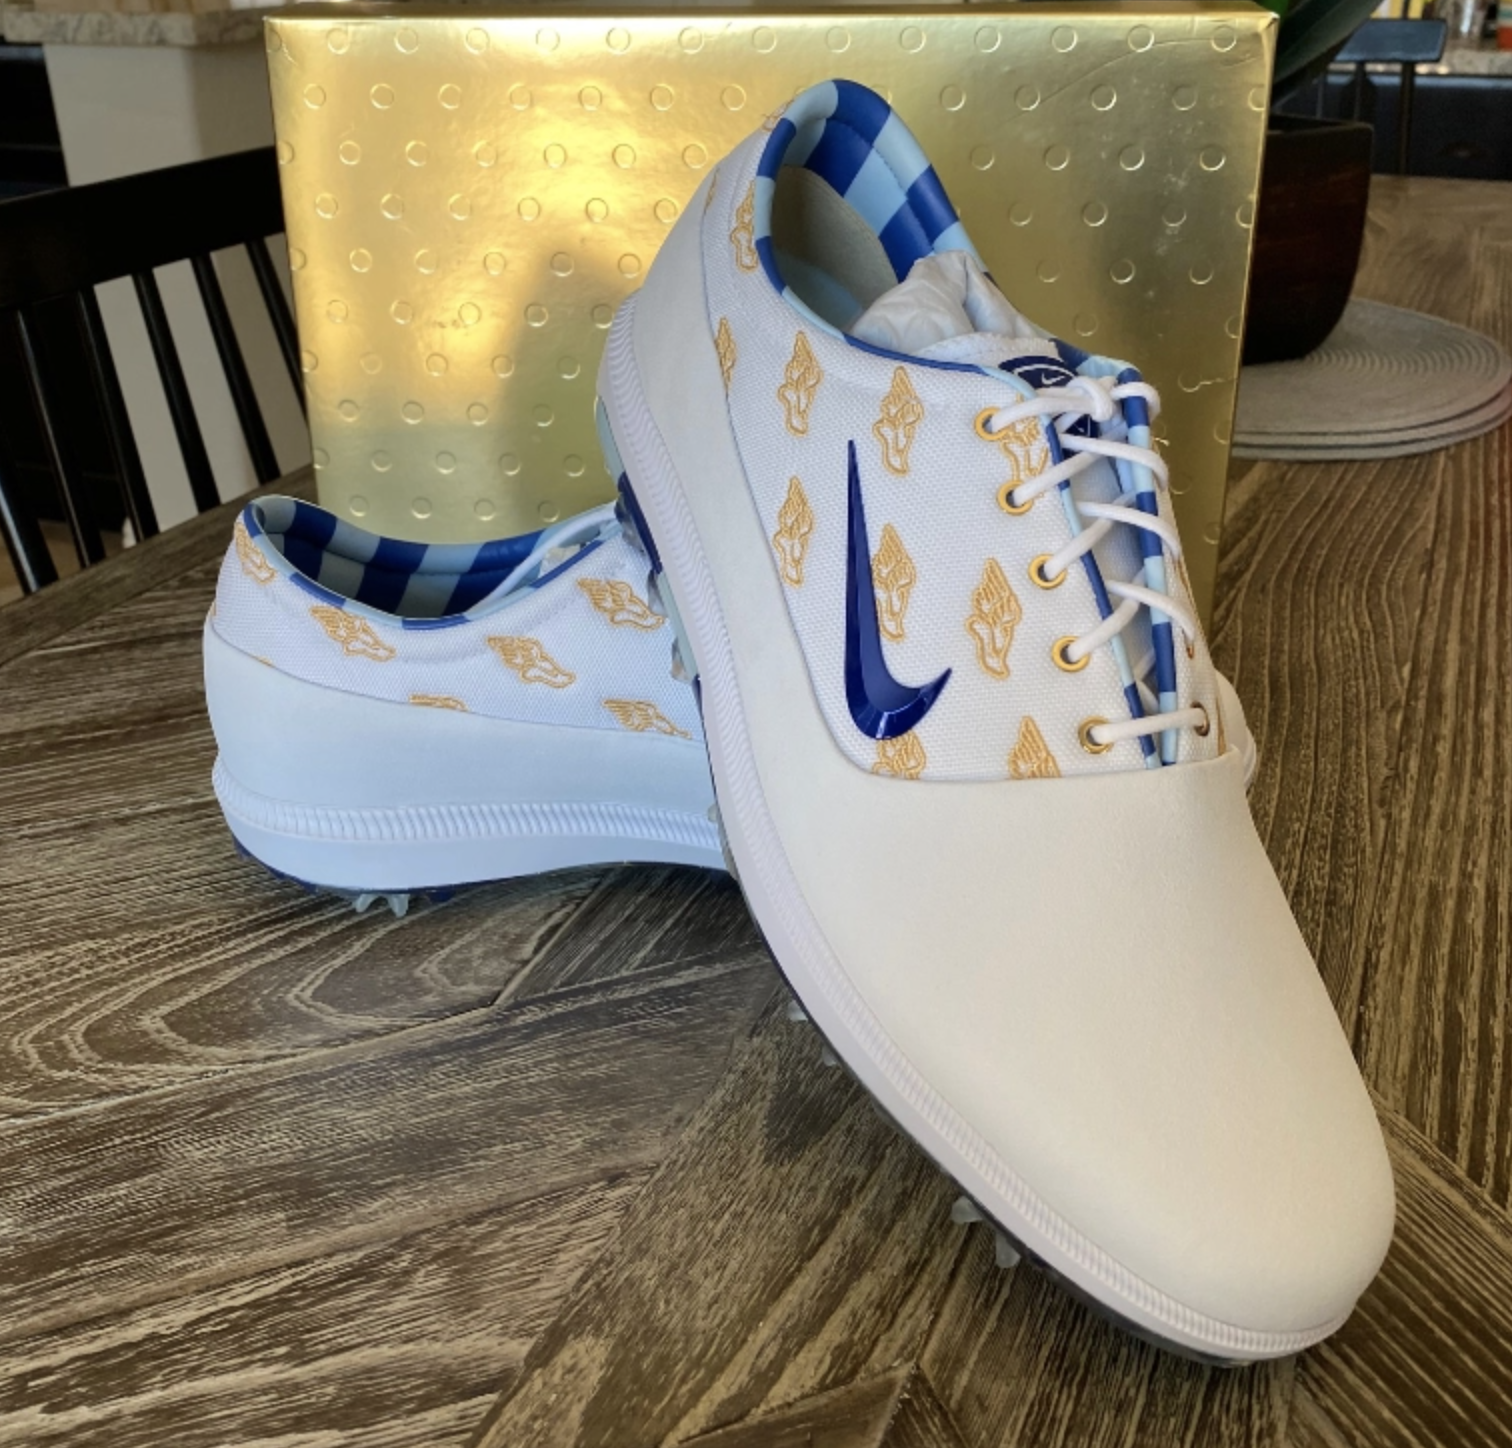 Get custom kicks like the LSU athletes from this local footwear designer